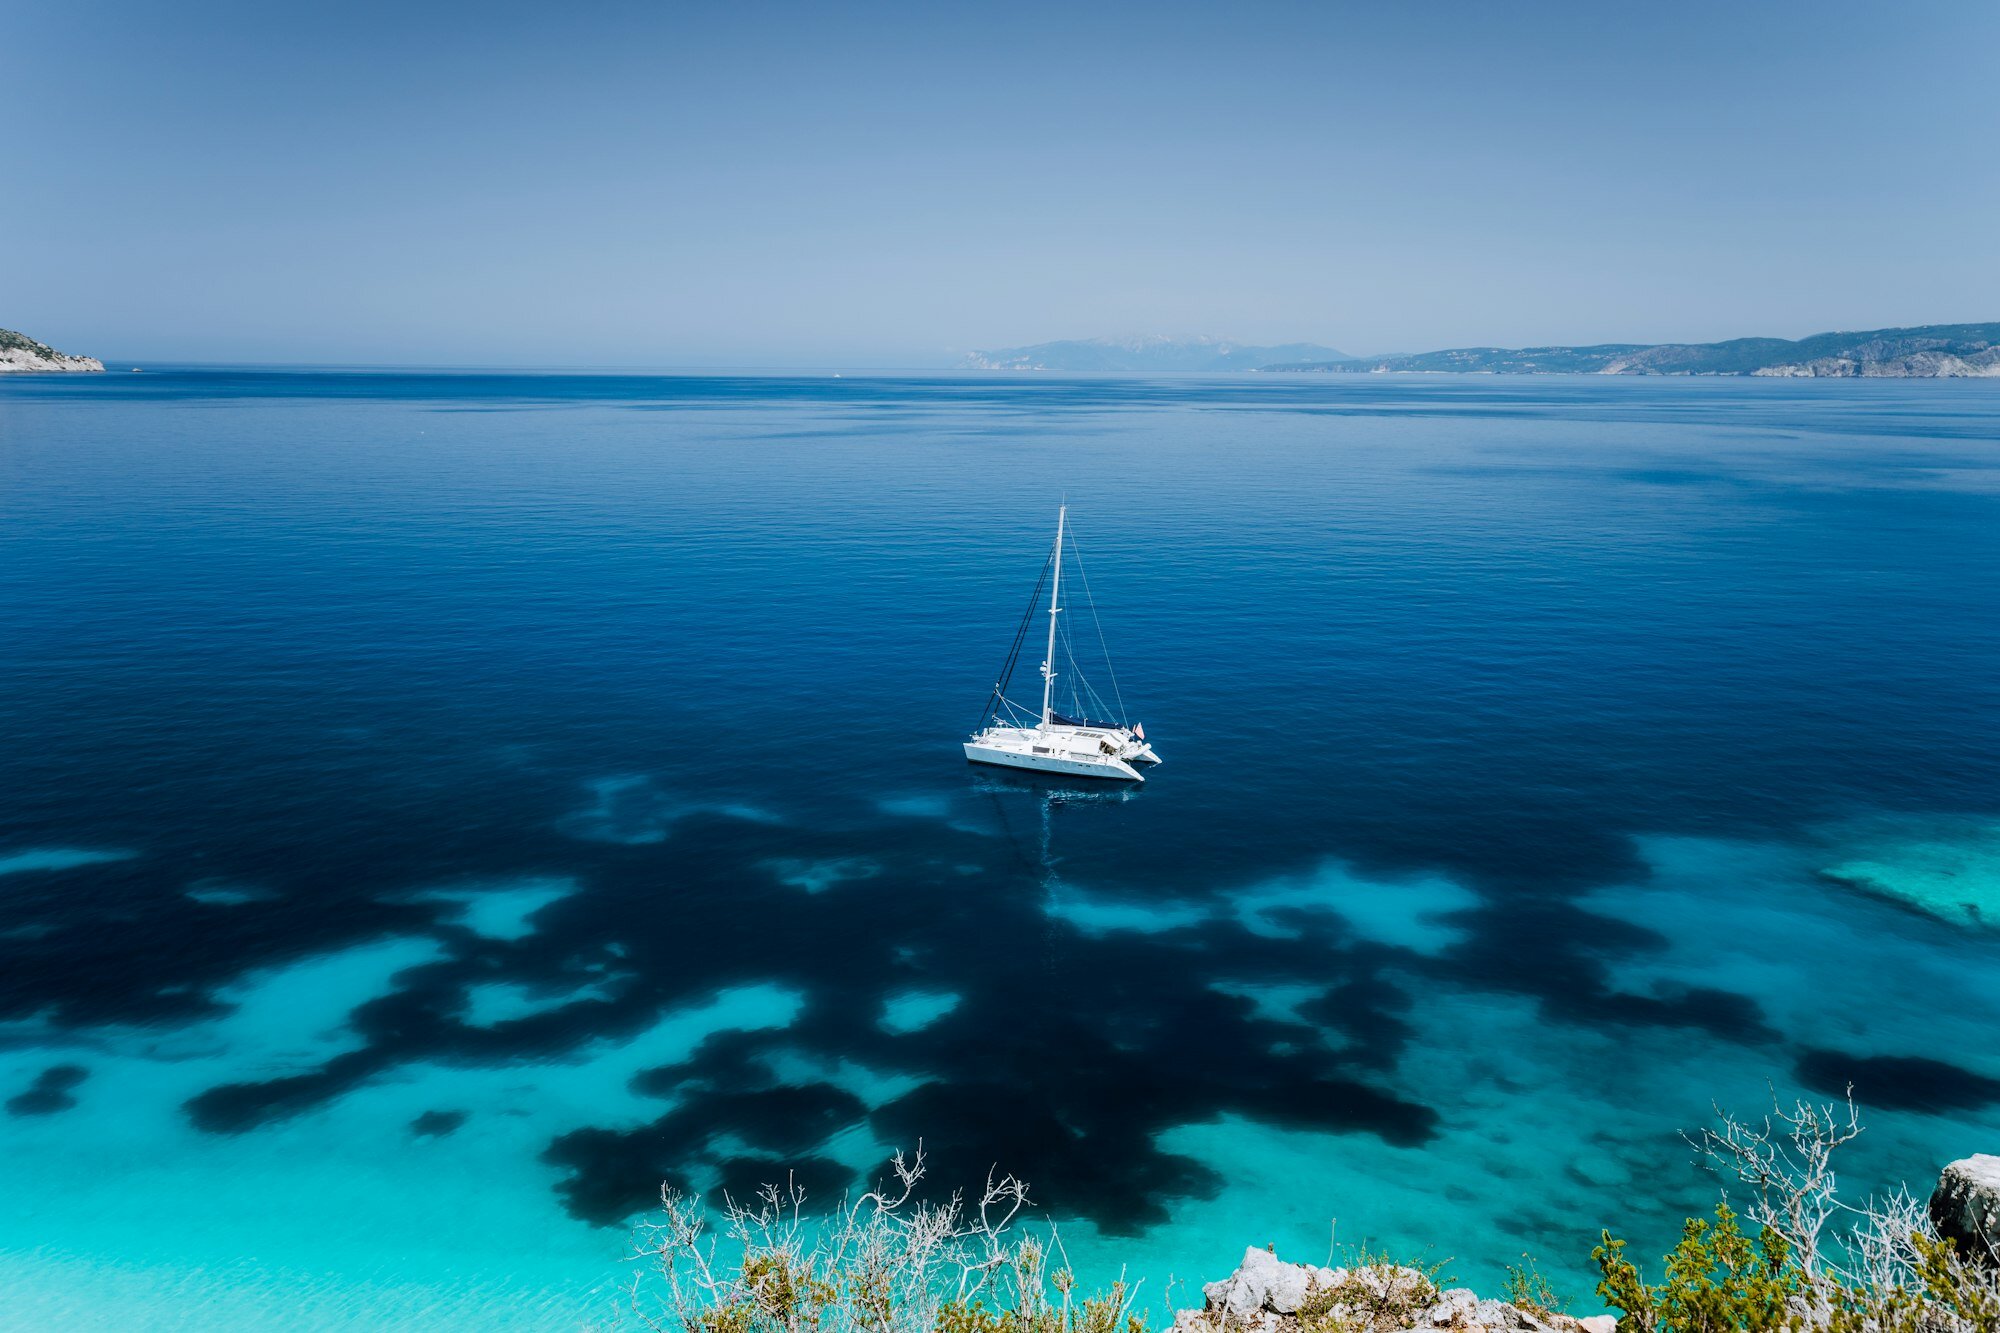 Fteri beach, Cephalonia Kefalonia, Greece. White catamaran yacht in clear blue transparent sea water